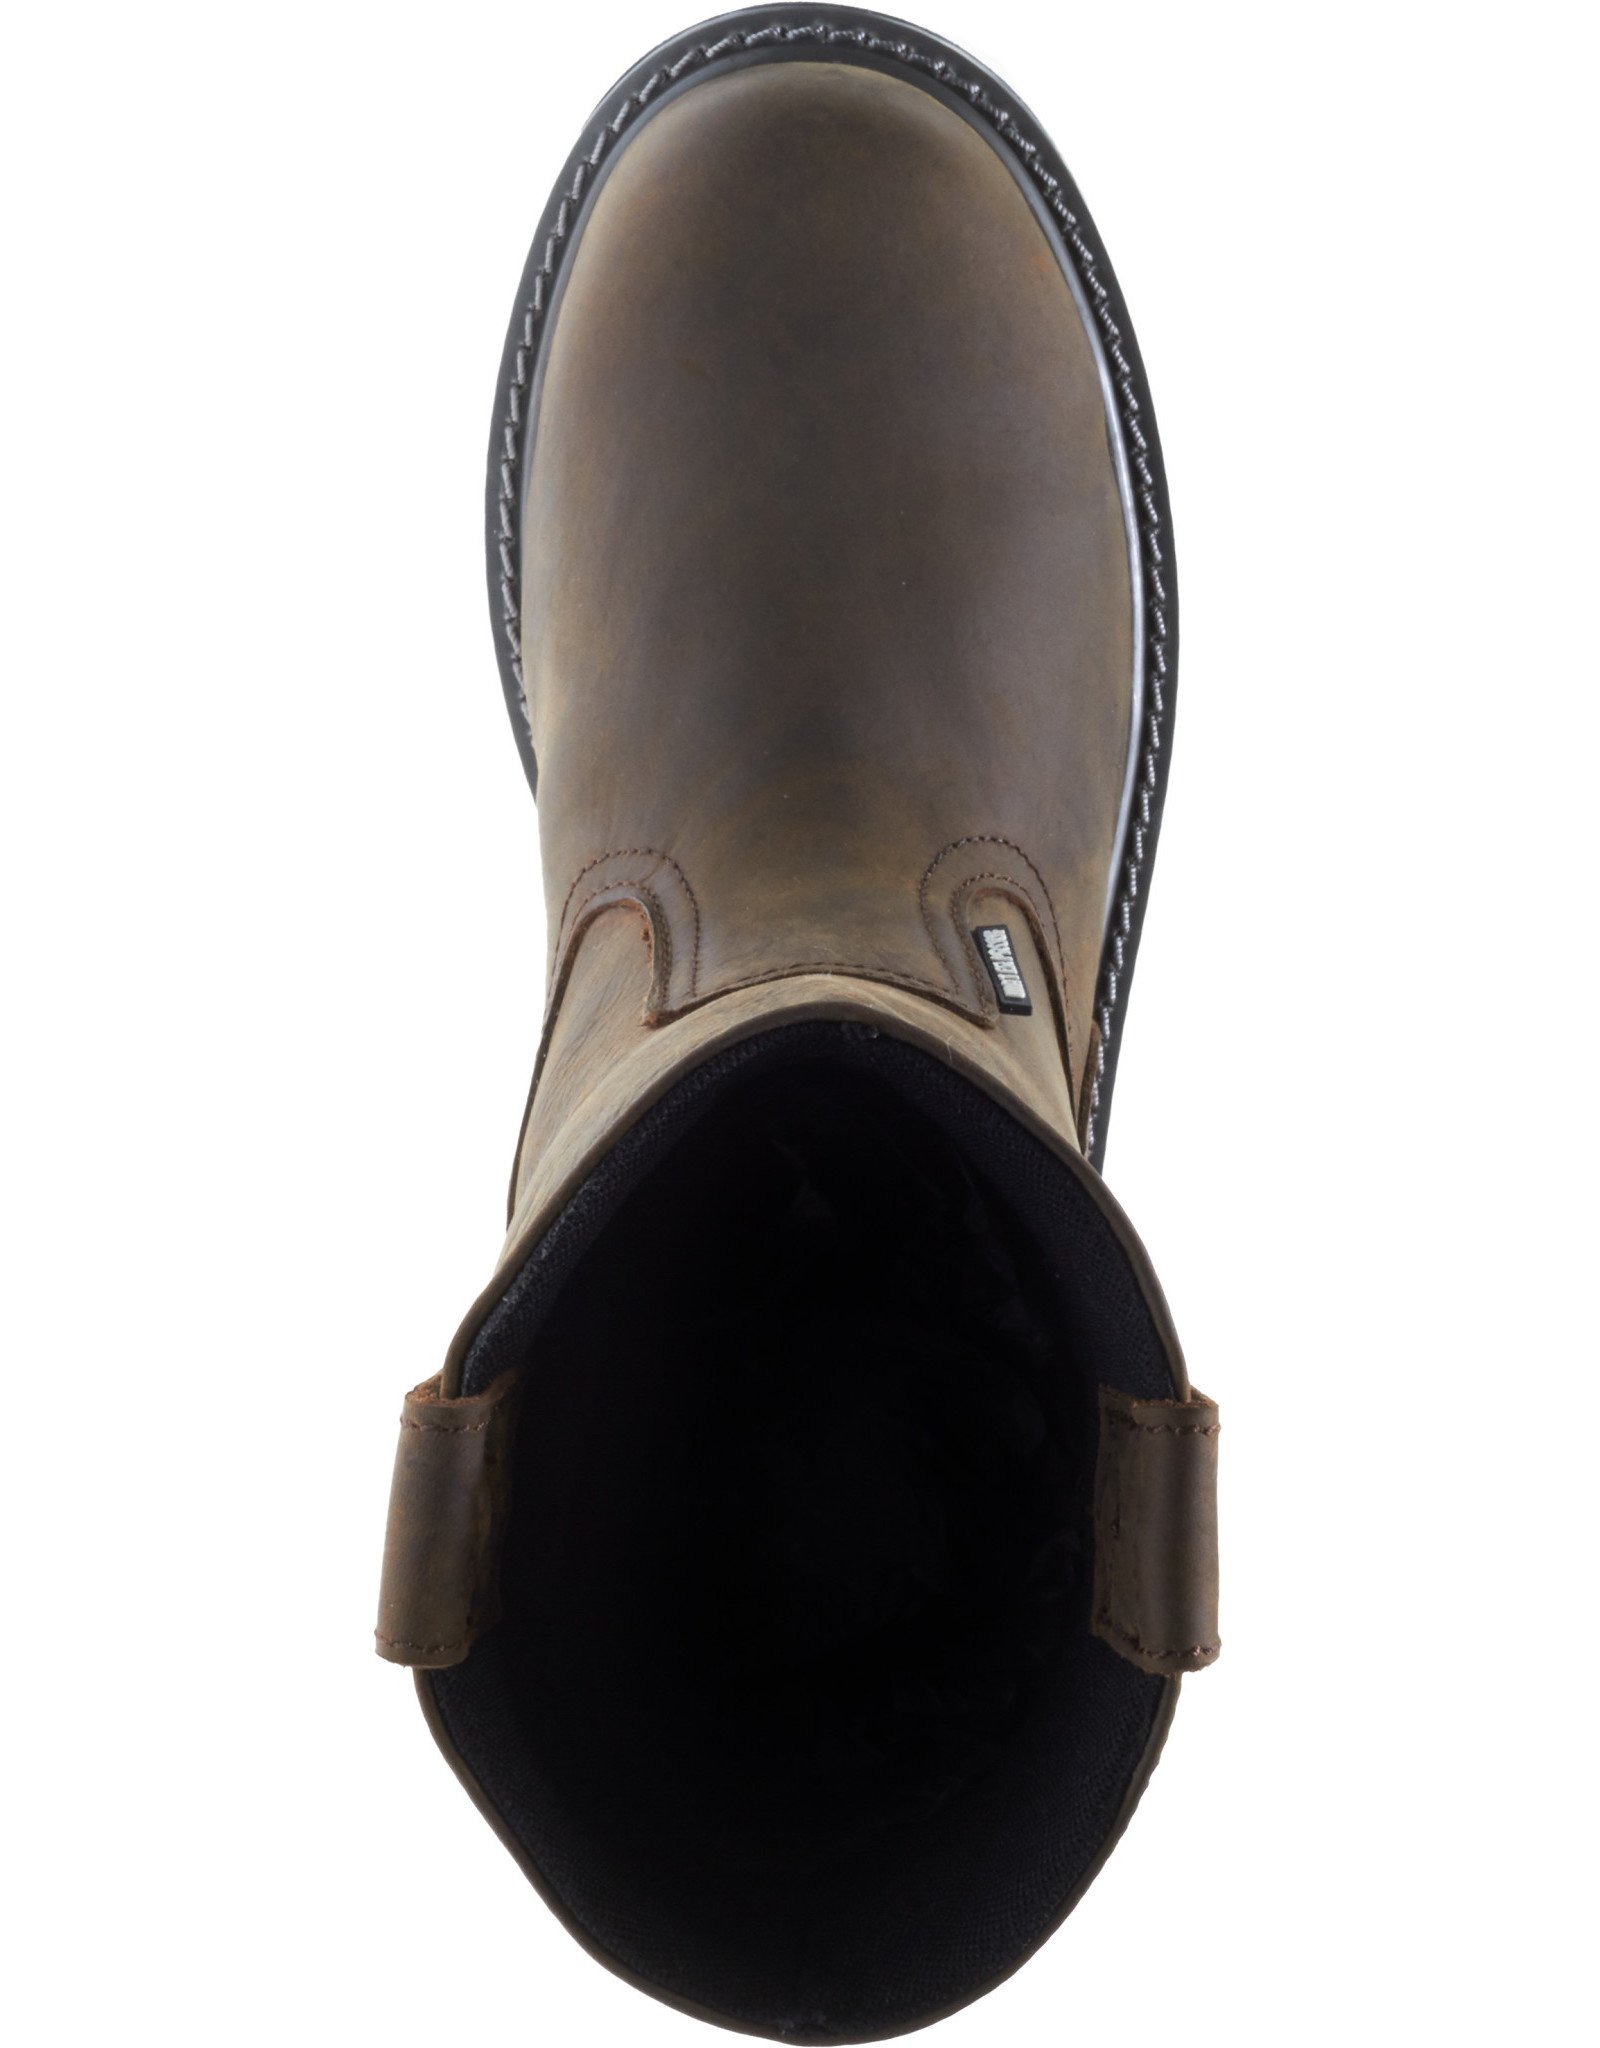 Wolverine Men's Wellington Floorhand W10682 Soft Toe Work Boots